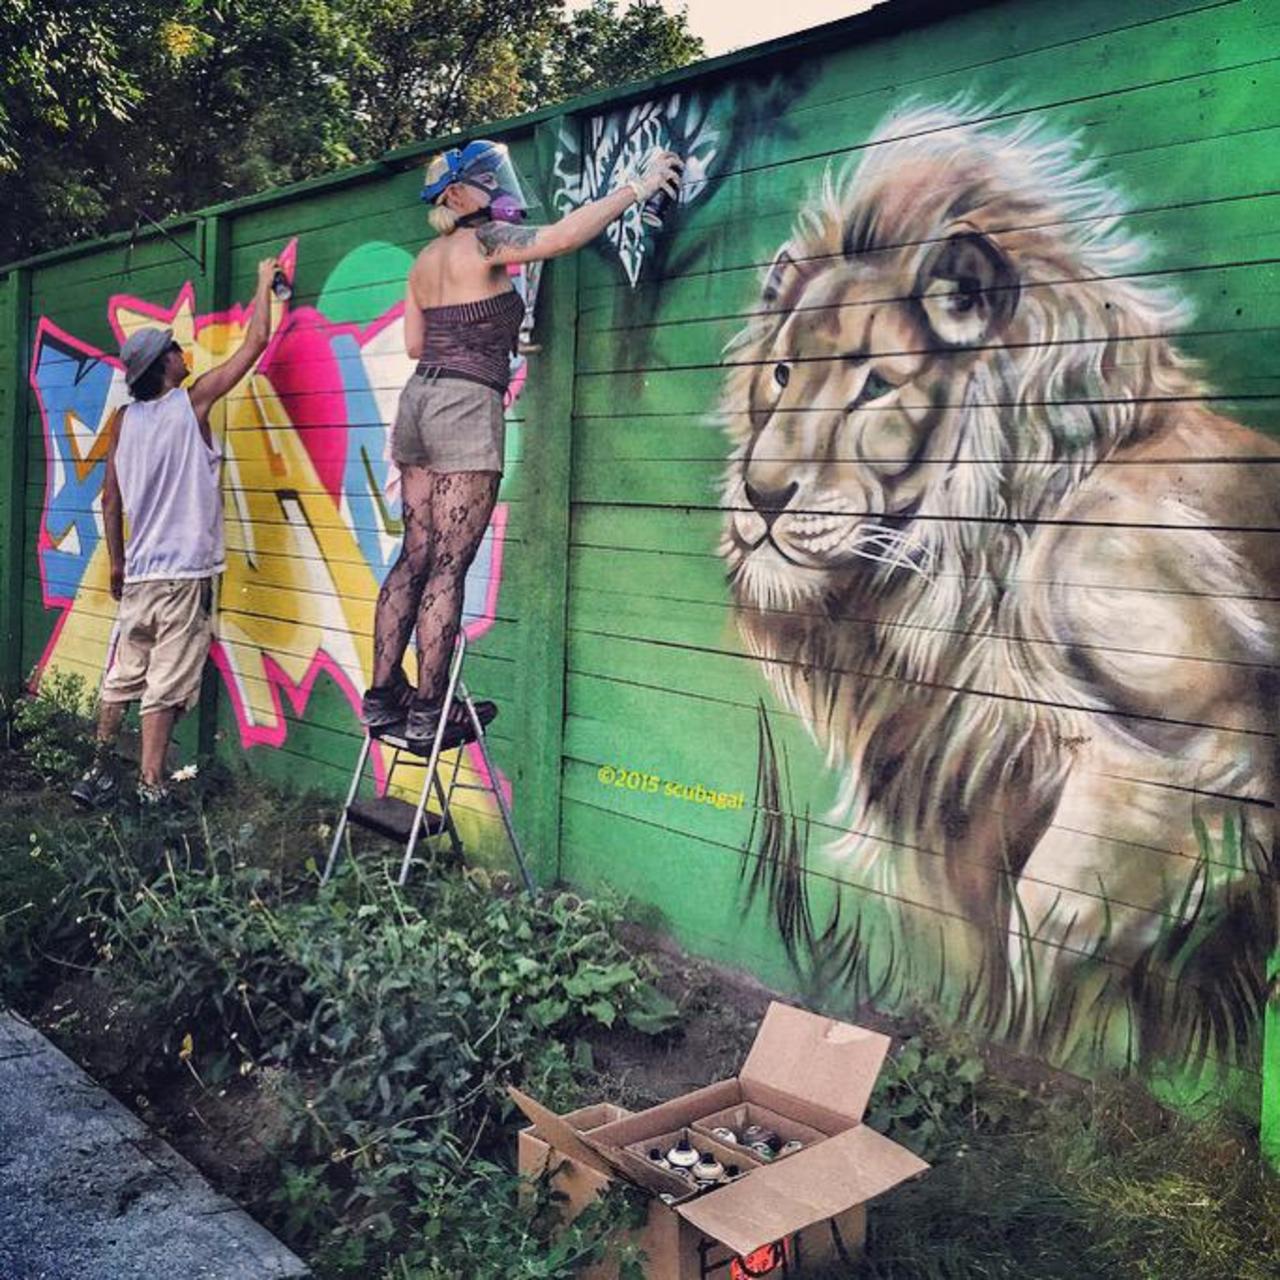 The Lion Queen | #Toronto #art #graffiti #paint #streetphotography #streetart @StART_Toronto @cityoftoronto http://t.co/FkUC2WSx7C